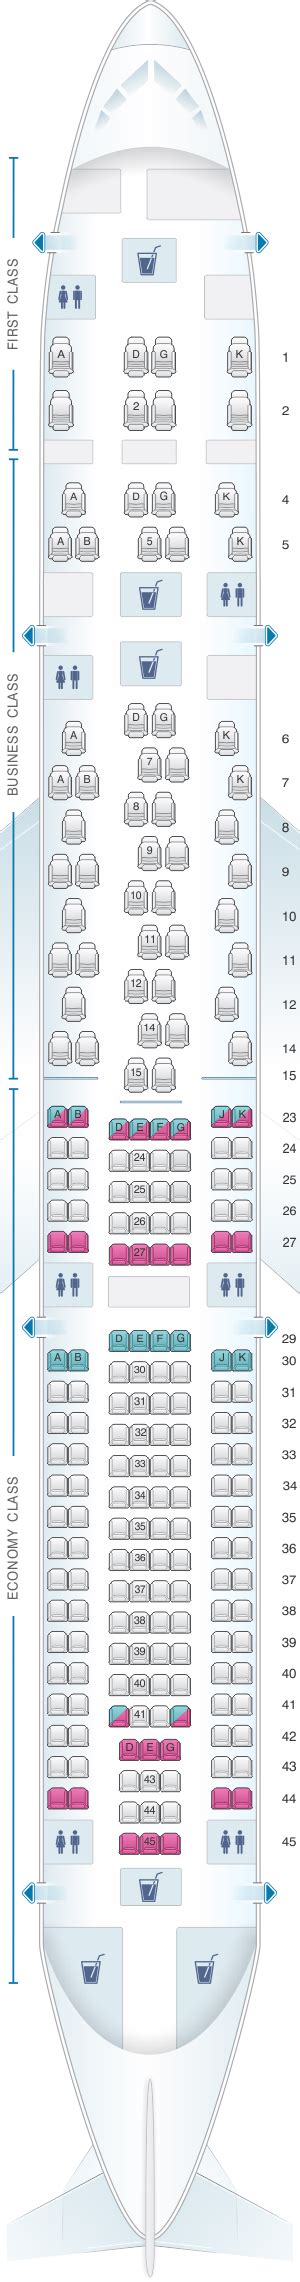 Plan De Cabine Swiss Airbus A340 300 Seatmaestrofr